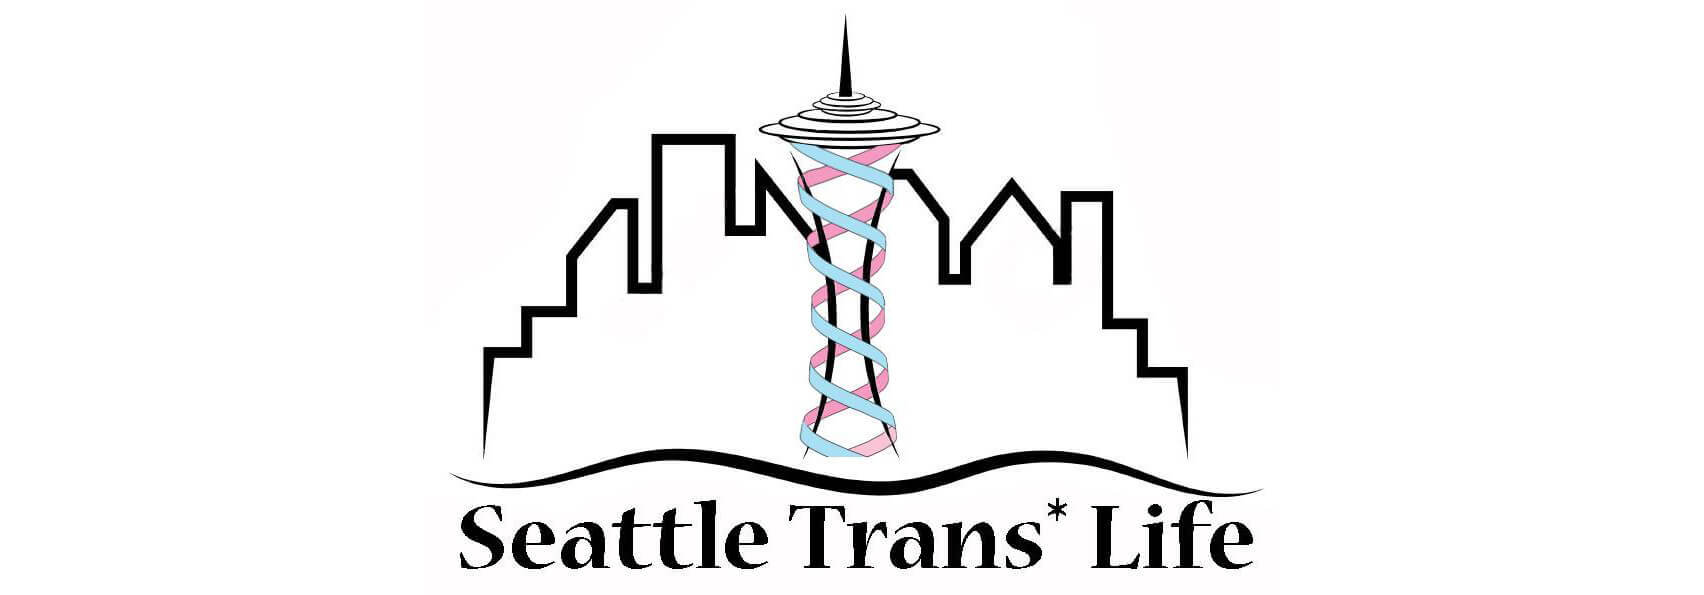 Seattle trans life 1